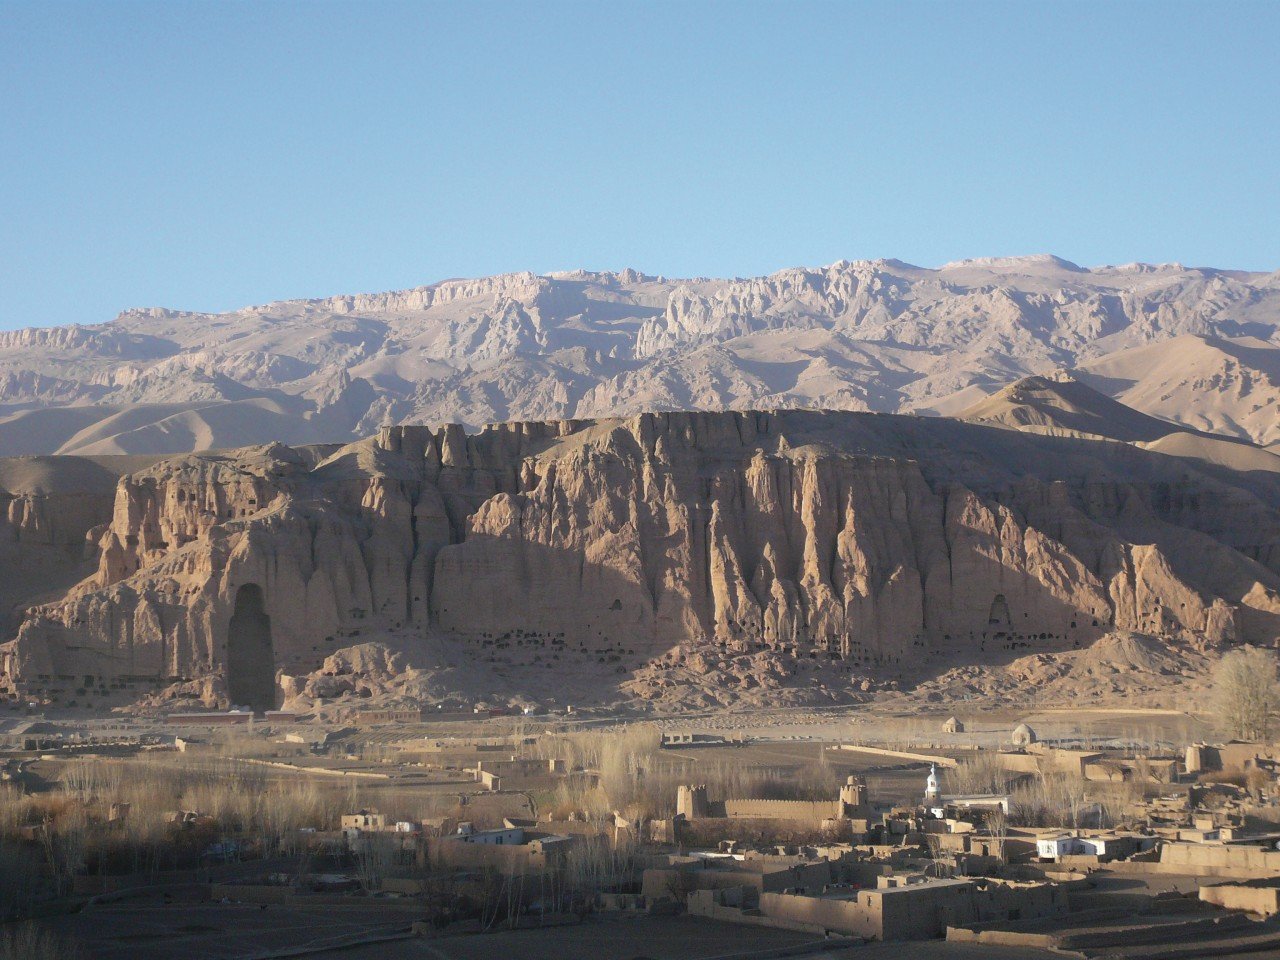 Day17 : Crossing rocky valleys towards Bamiyan